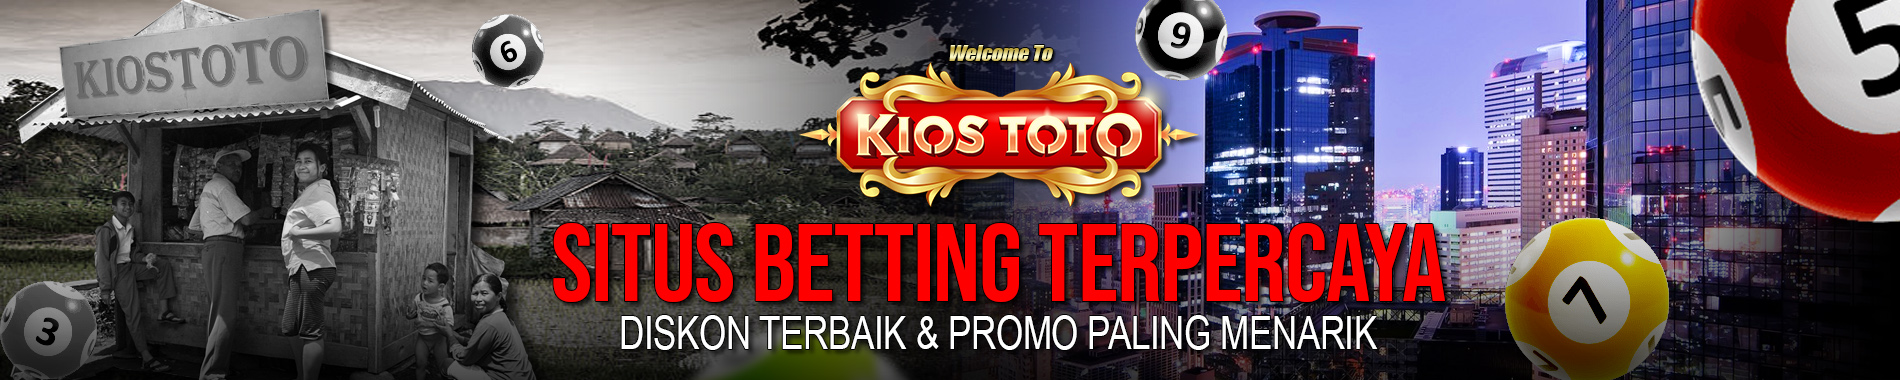 Kiostoto Situs Betting Online Terpercaya